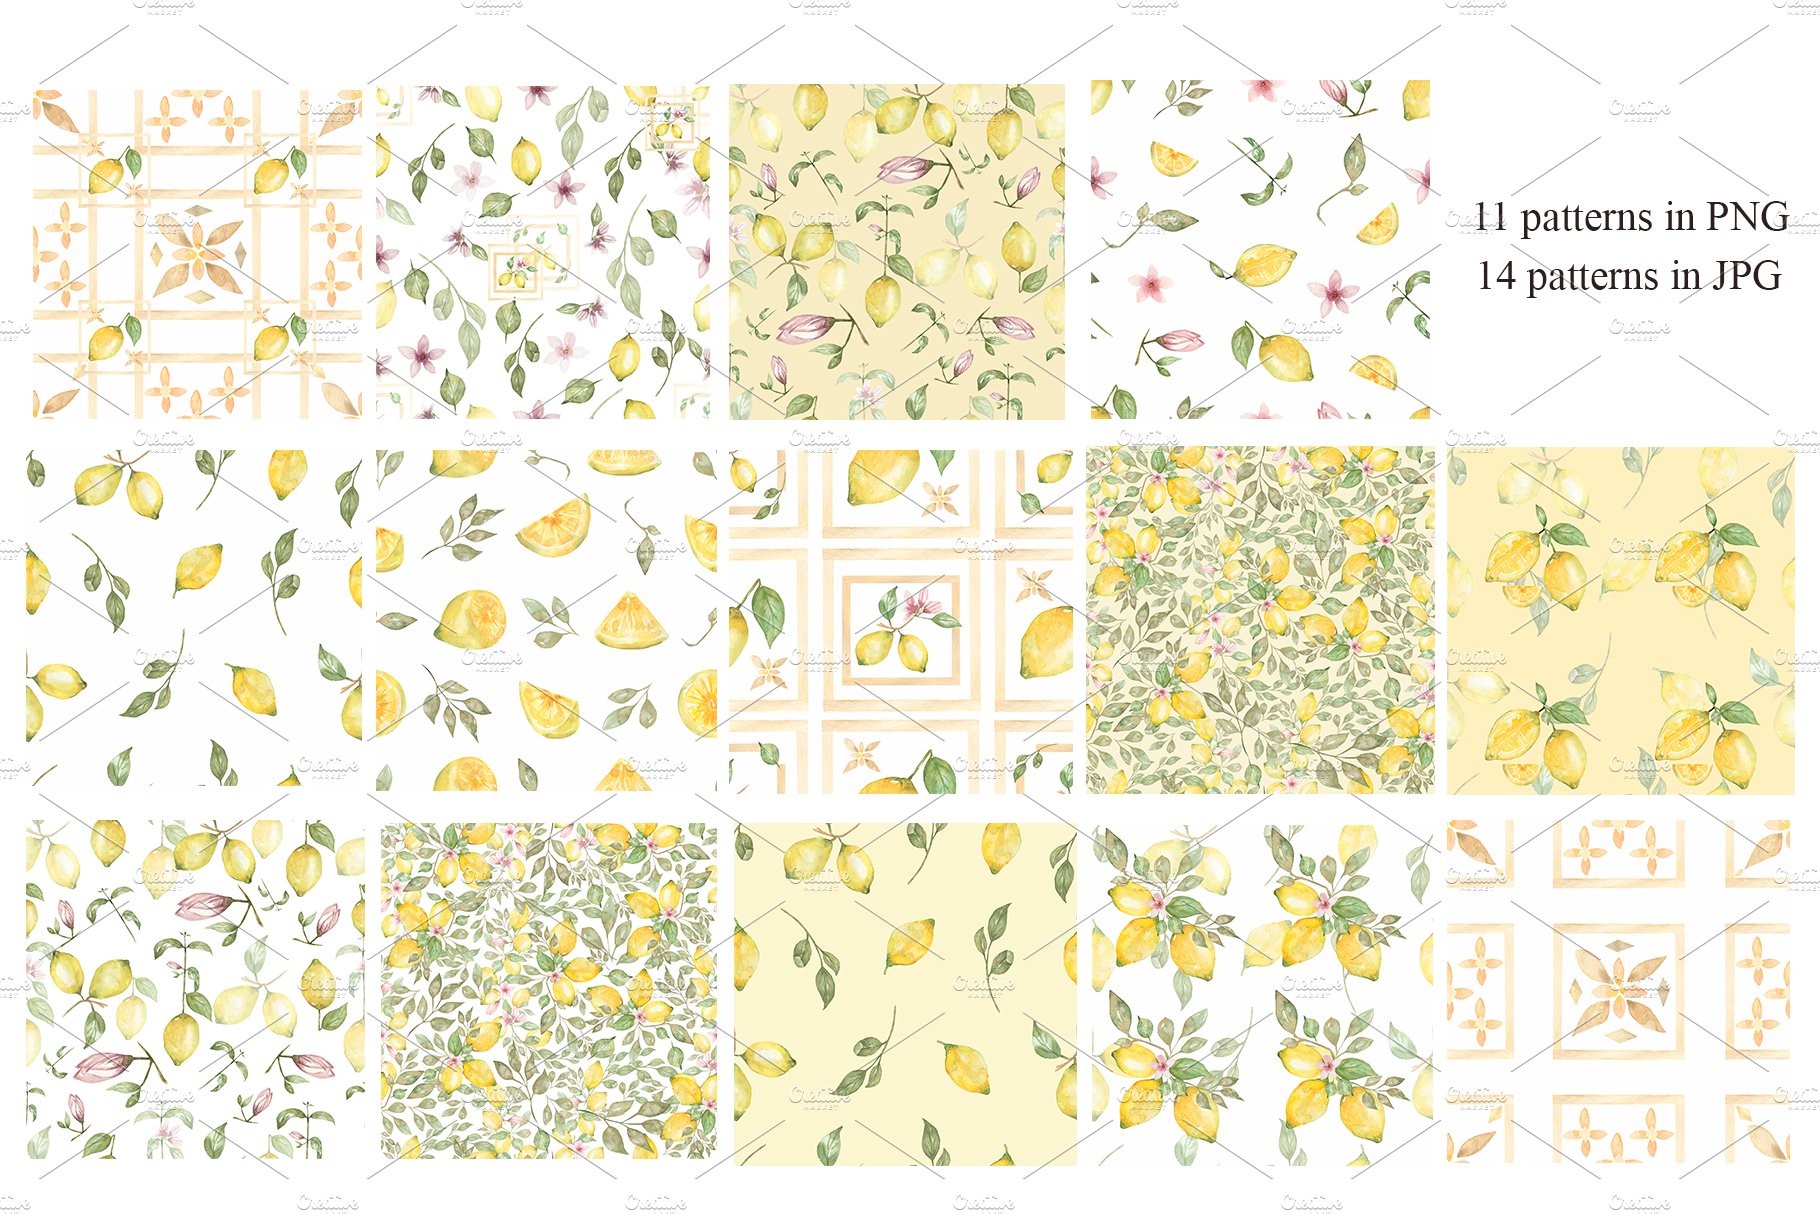 Watercolor Lemon Patterns preview image.